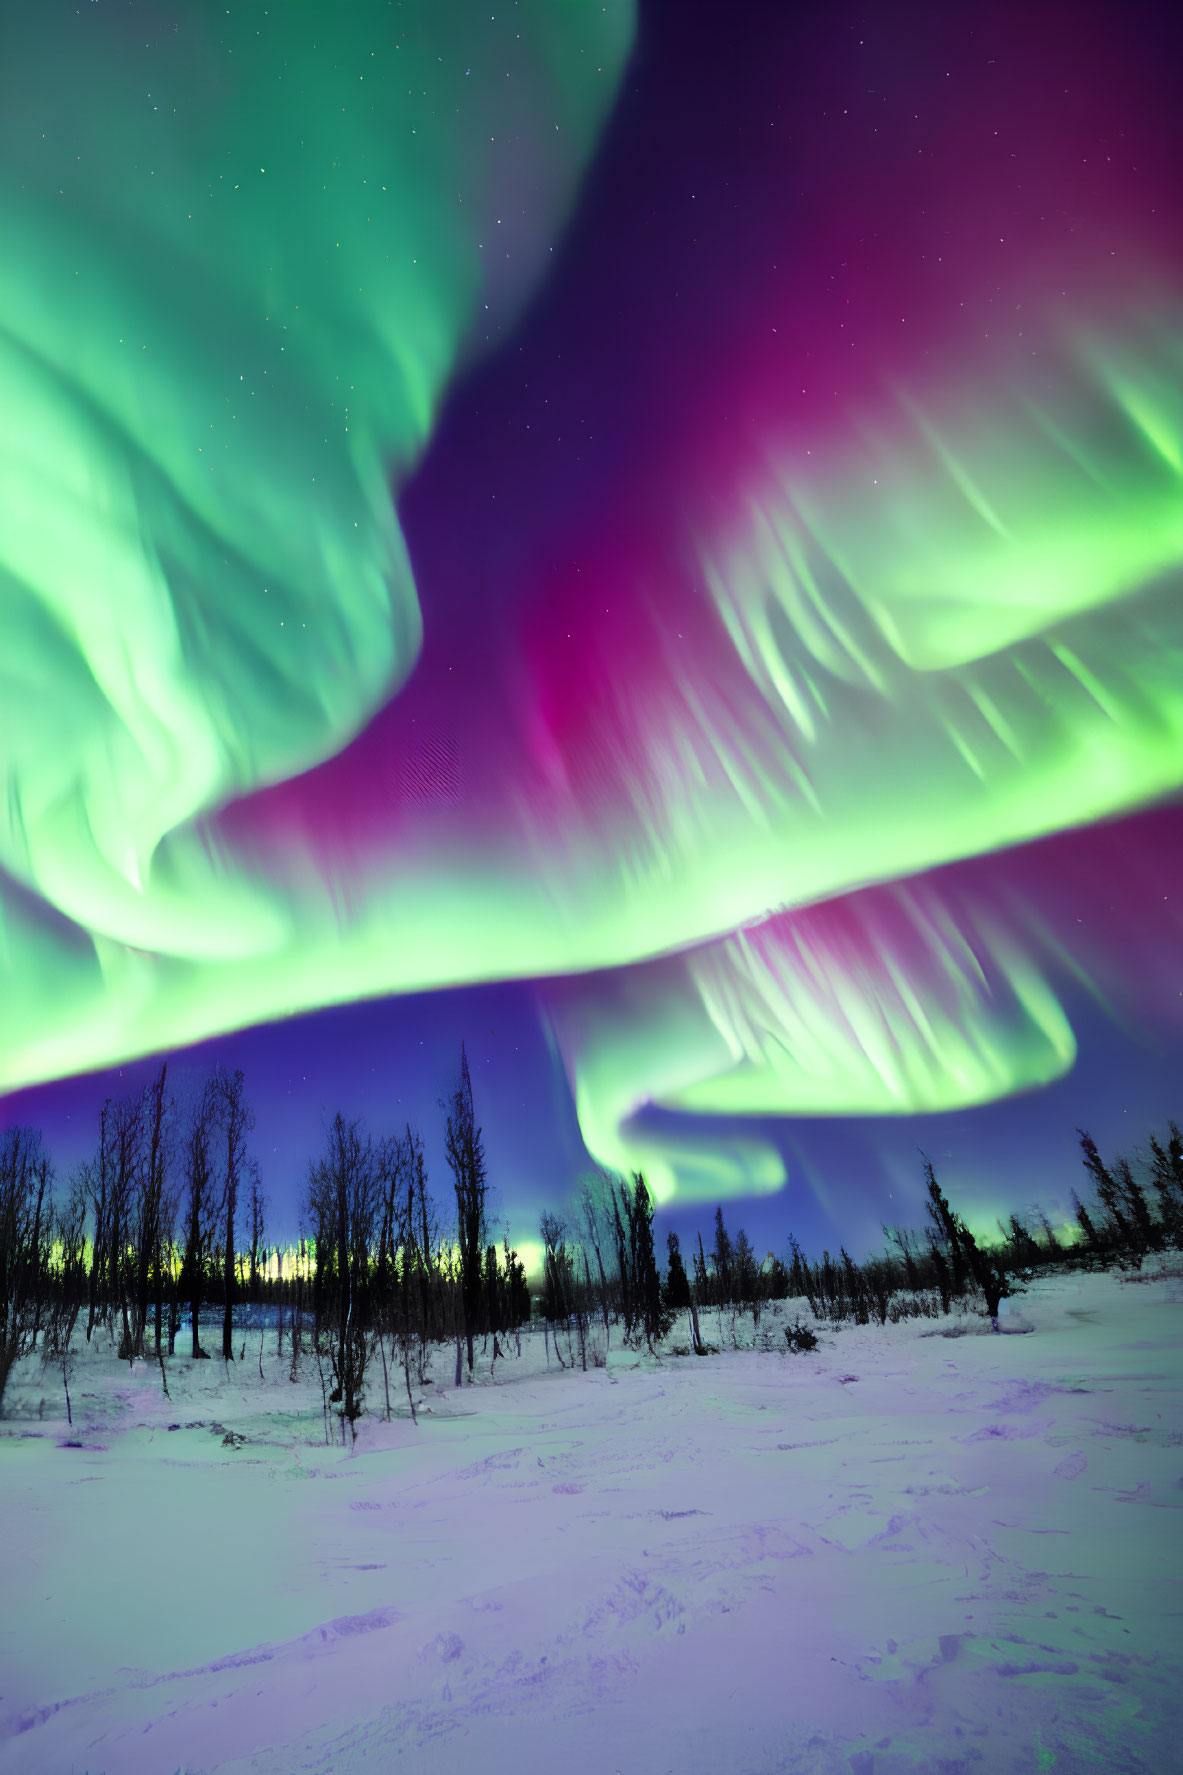 Colorful Aurora Borealis Illuminates Snowy Landscape